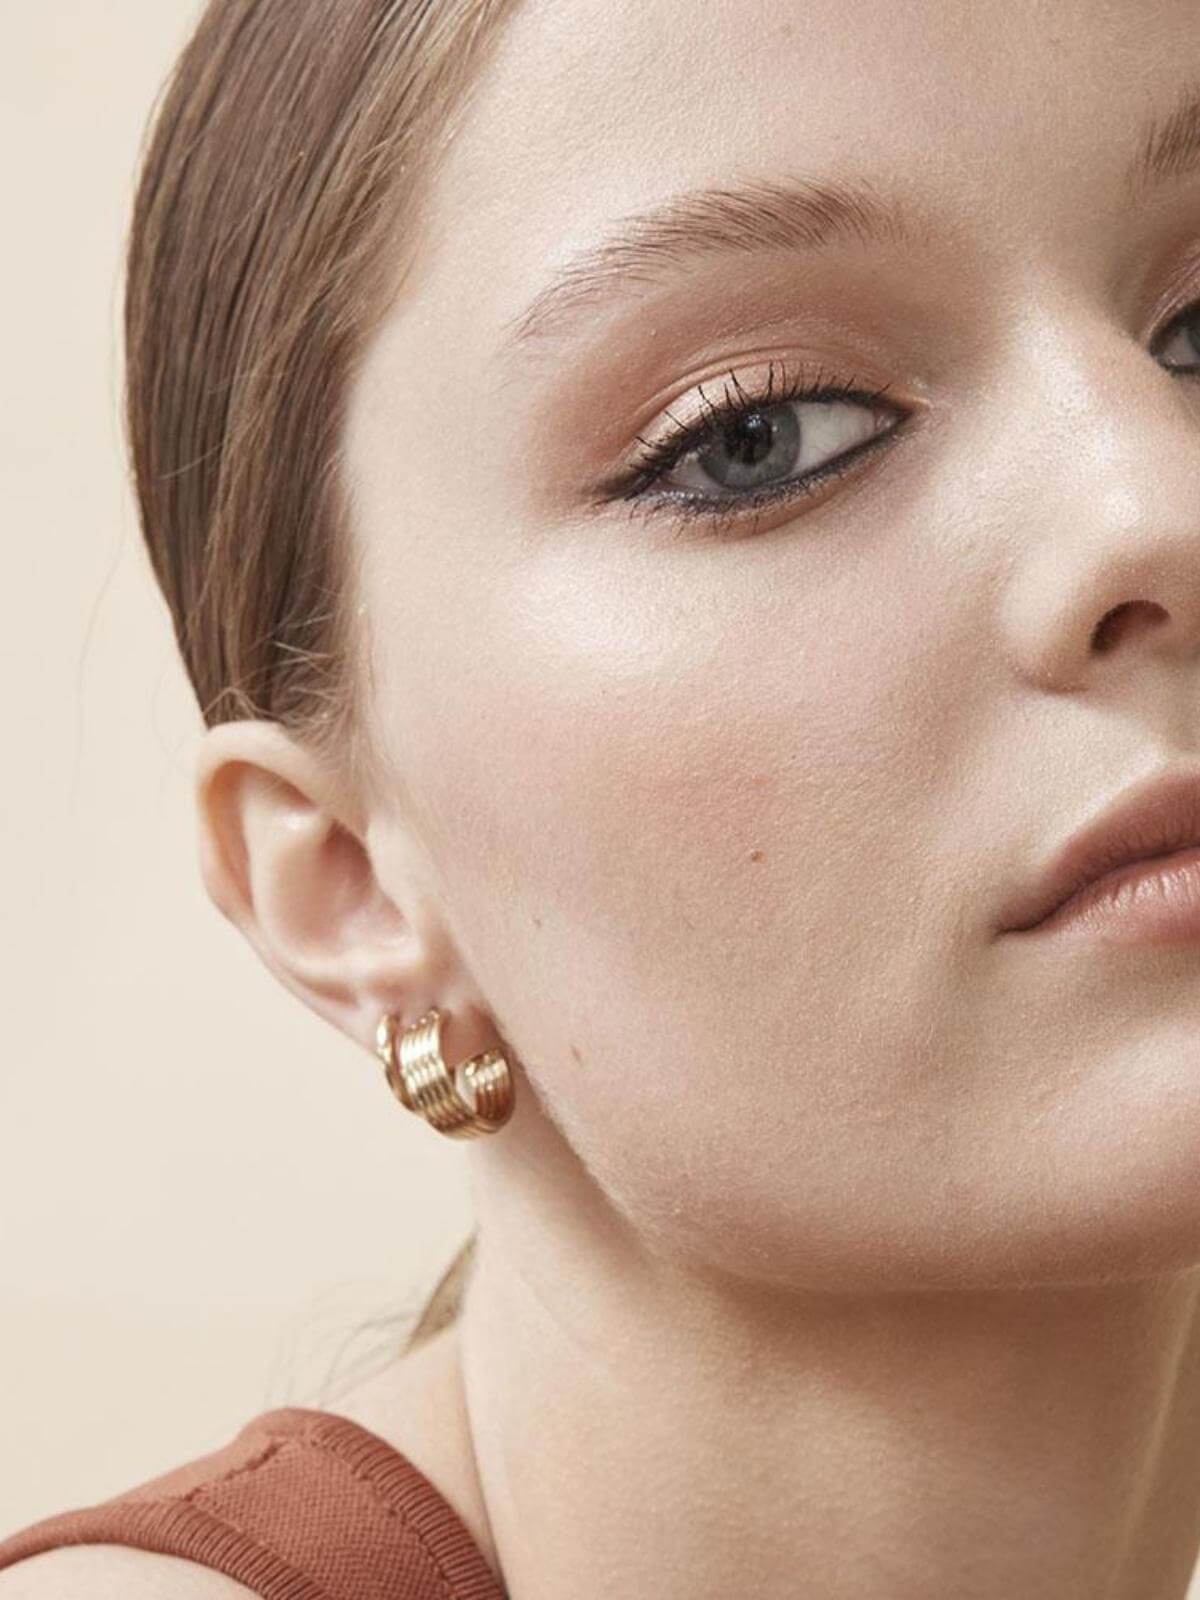 Rosie Hoops - Gold Earrings Jolie & Deen 